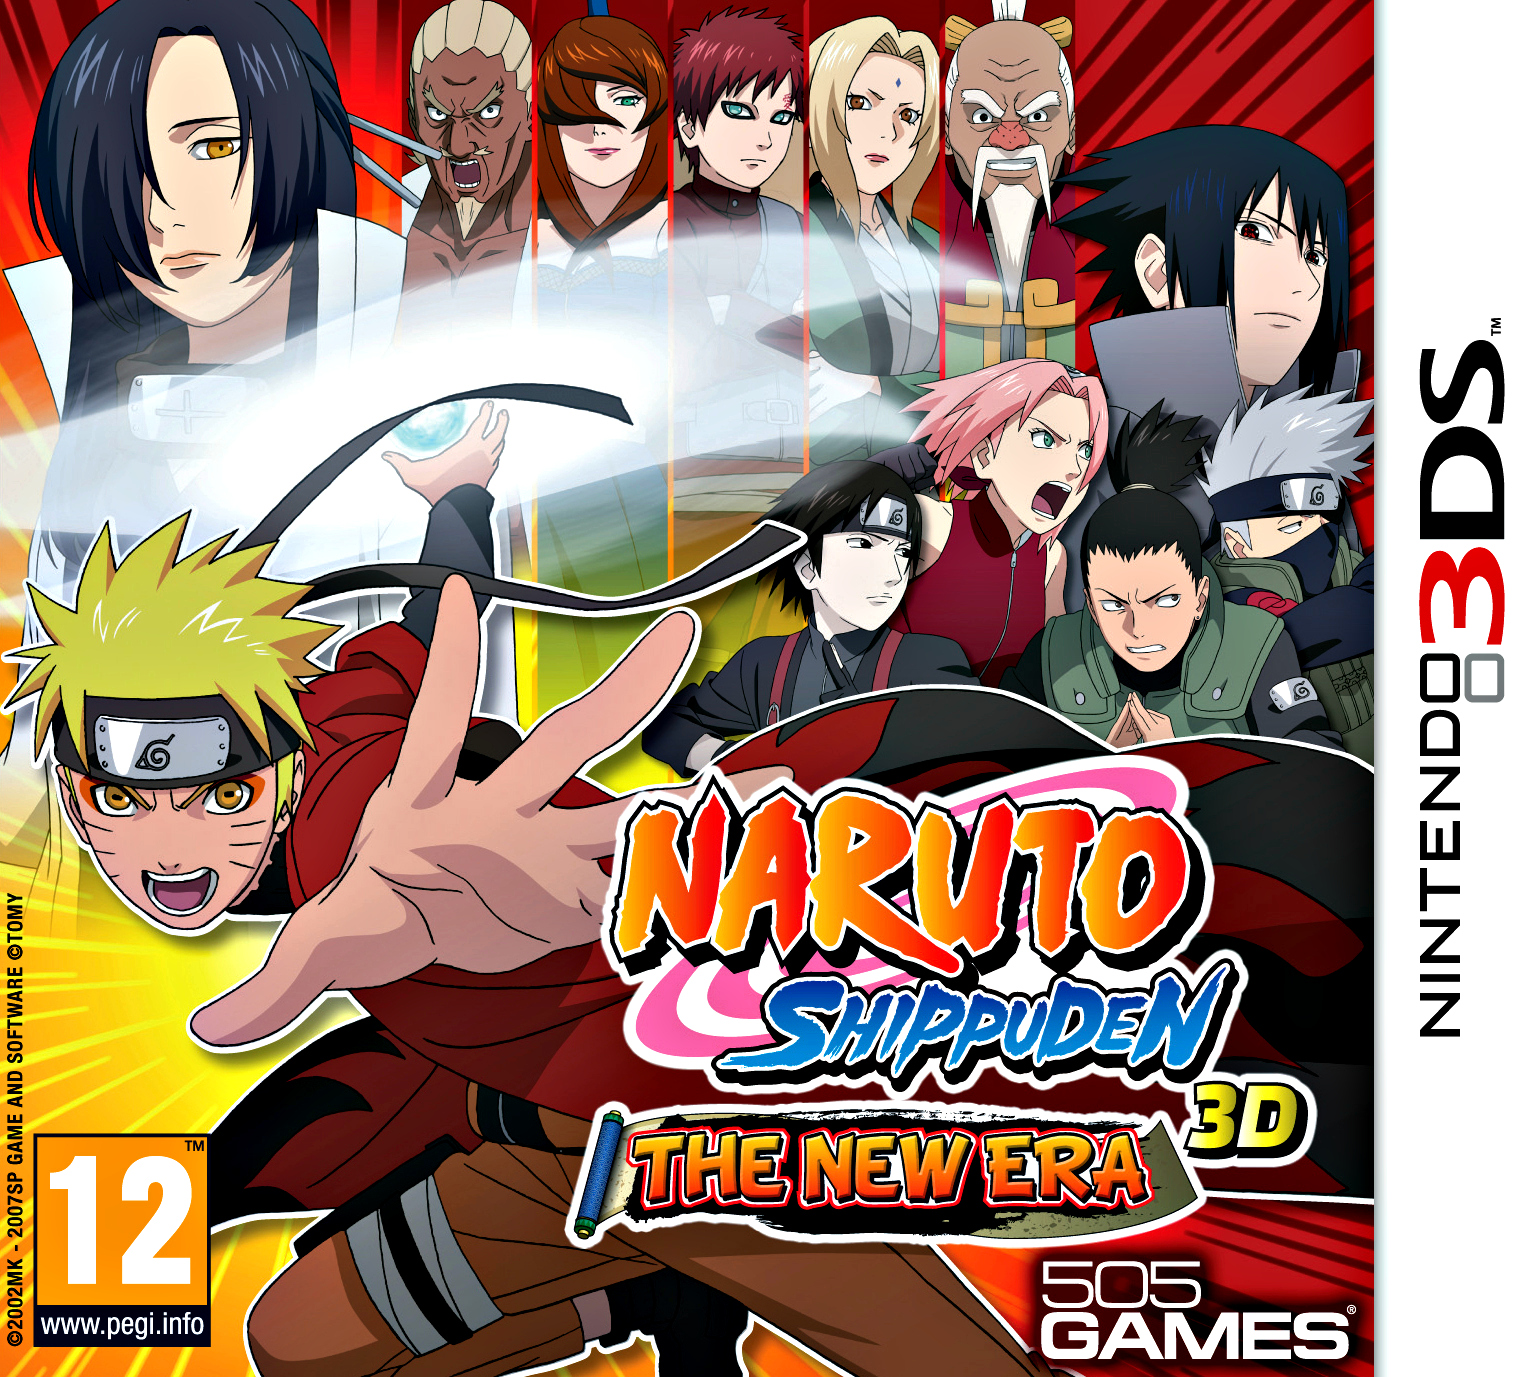 Got New Naruto Shipuuden Game!